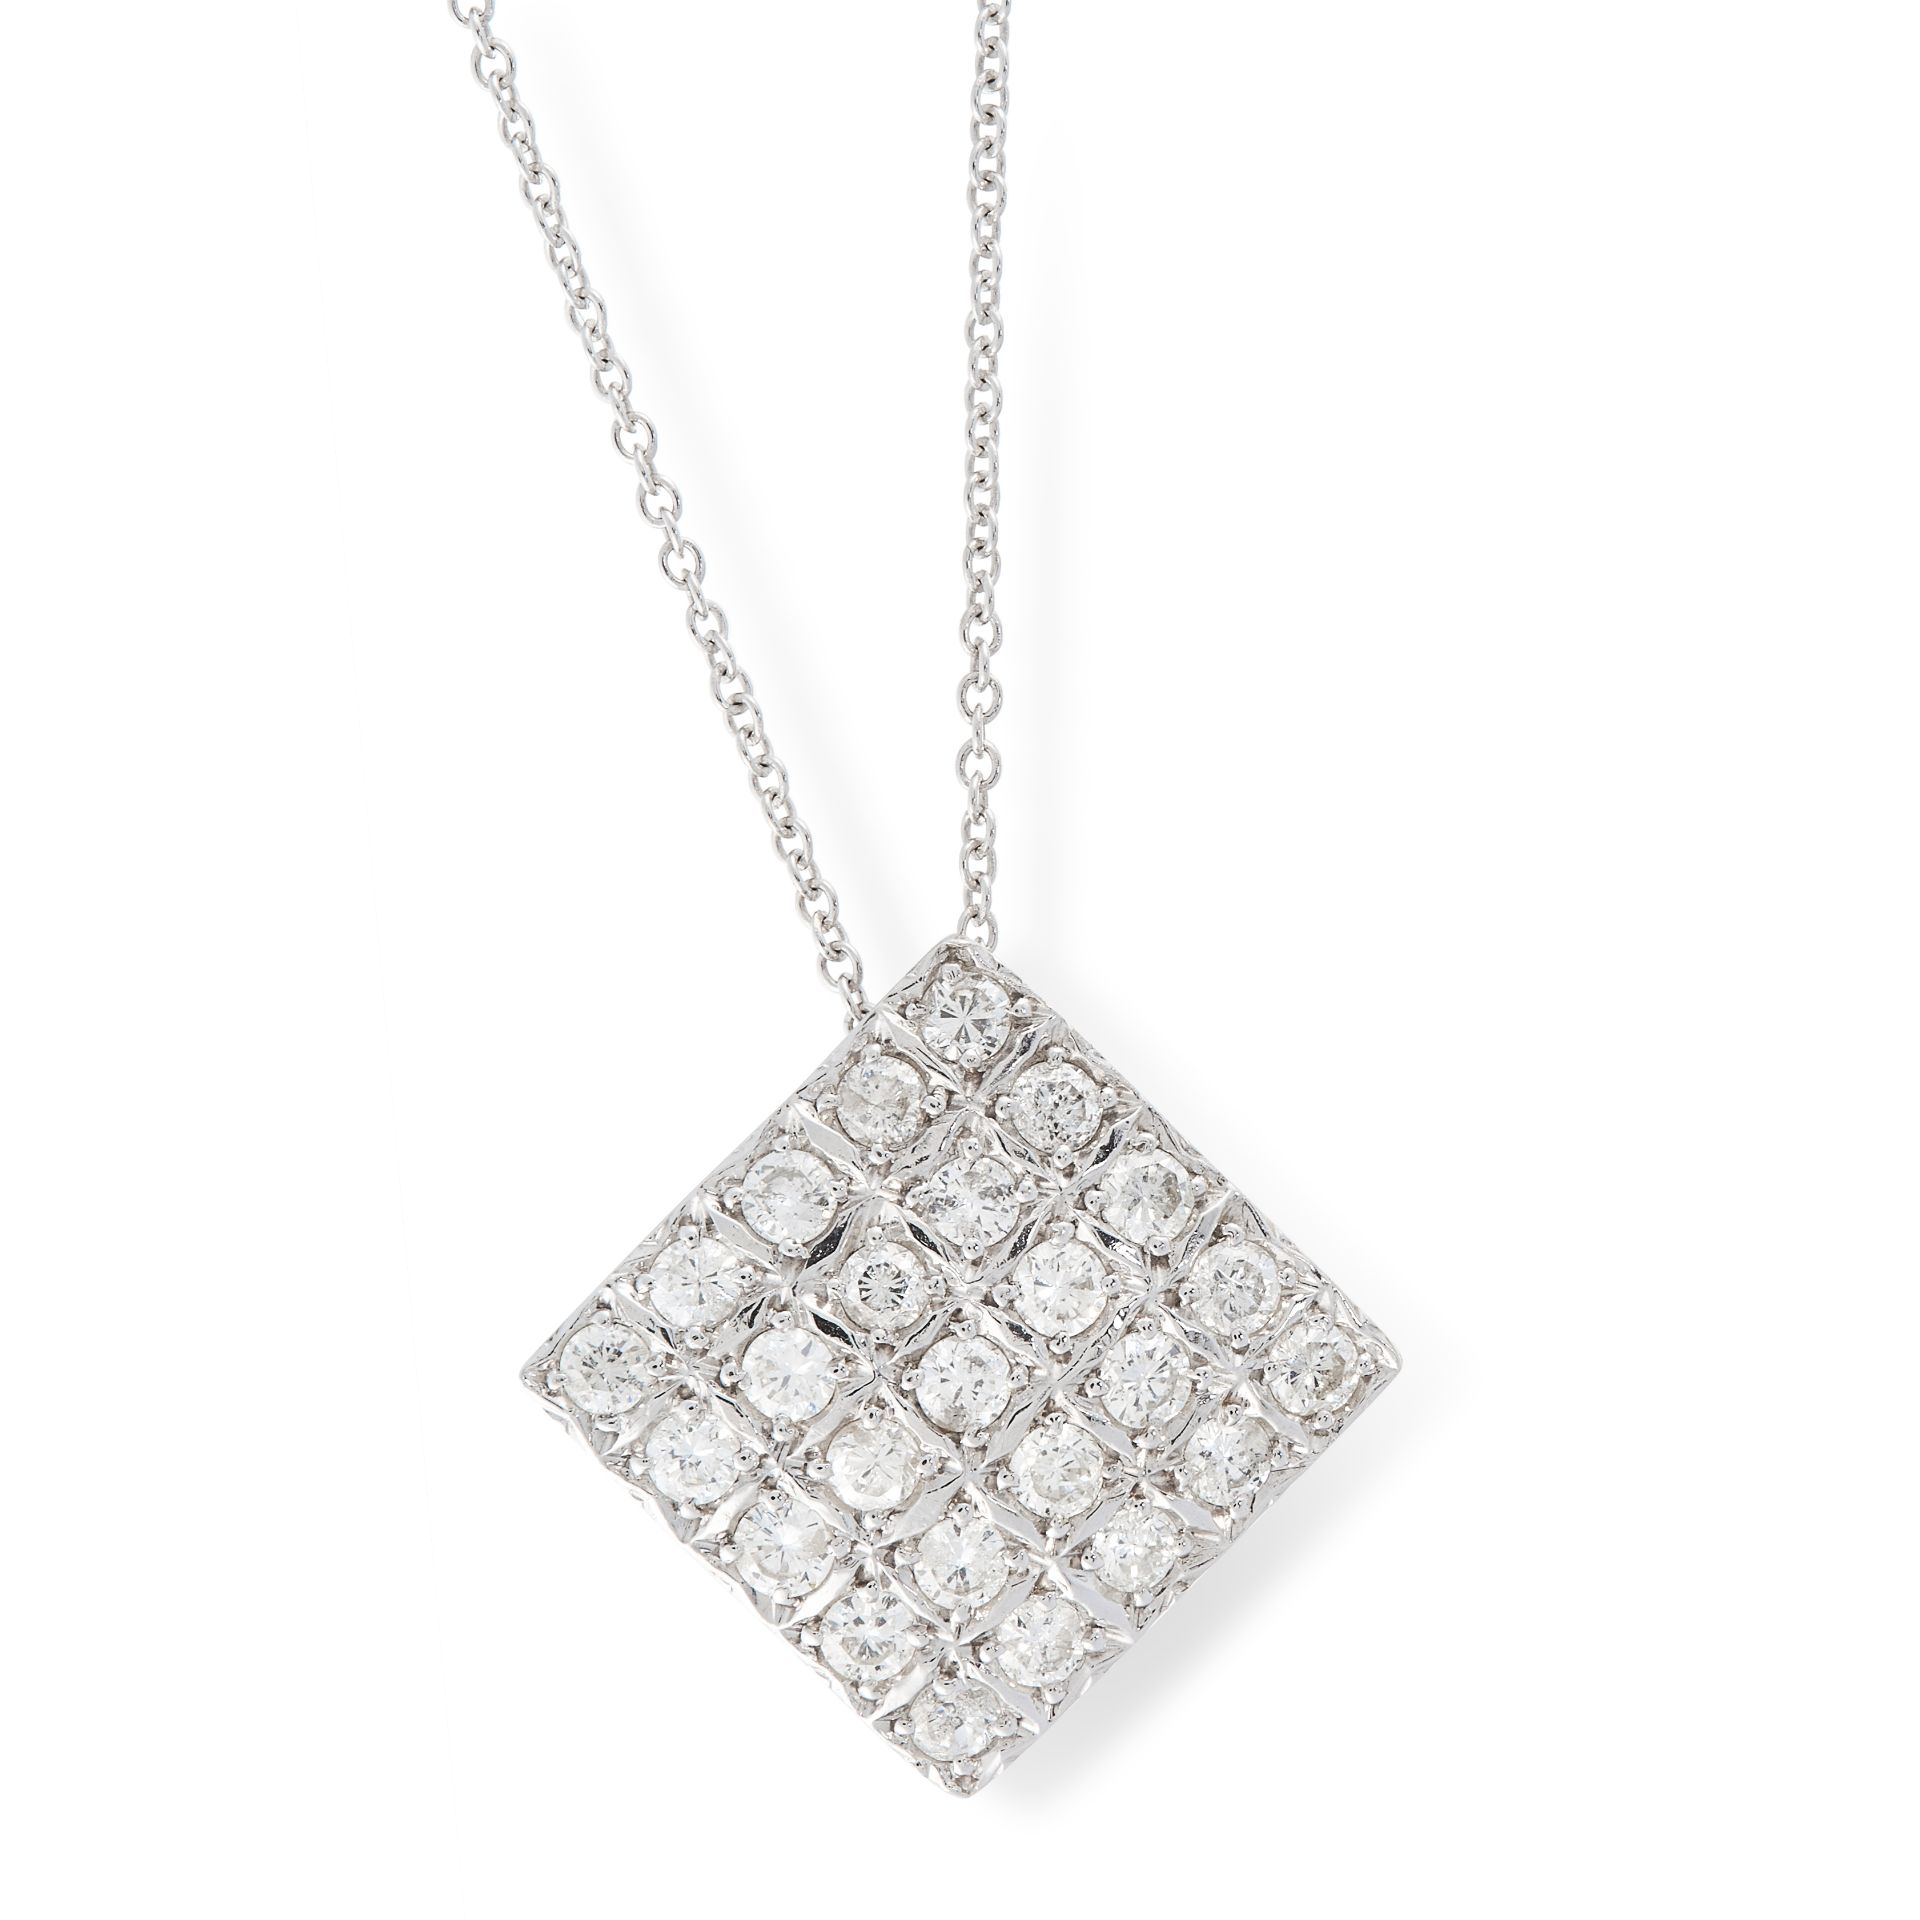 A DIAMOND PENDANT AND CHAIN in 18ct white gold, square design set with round cut diamonds